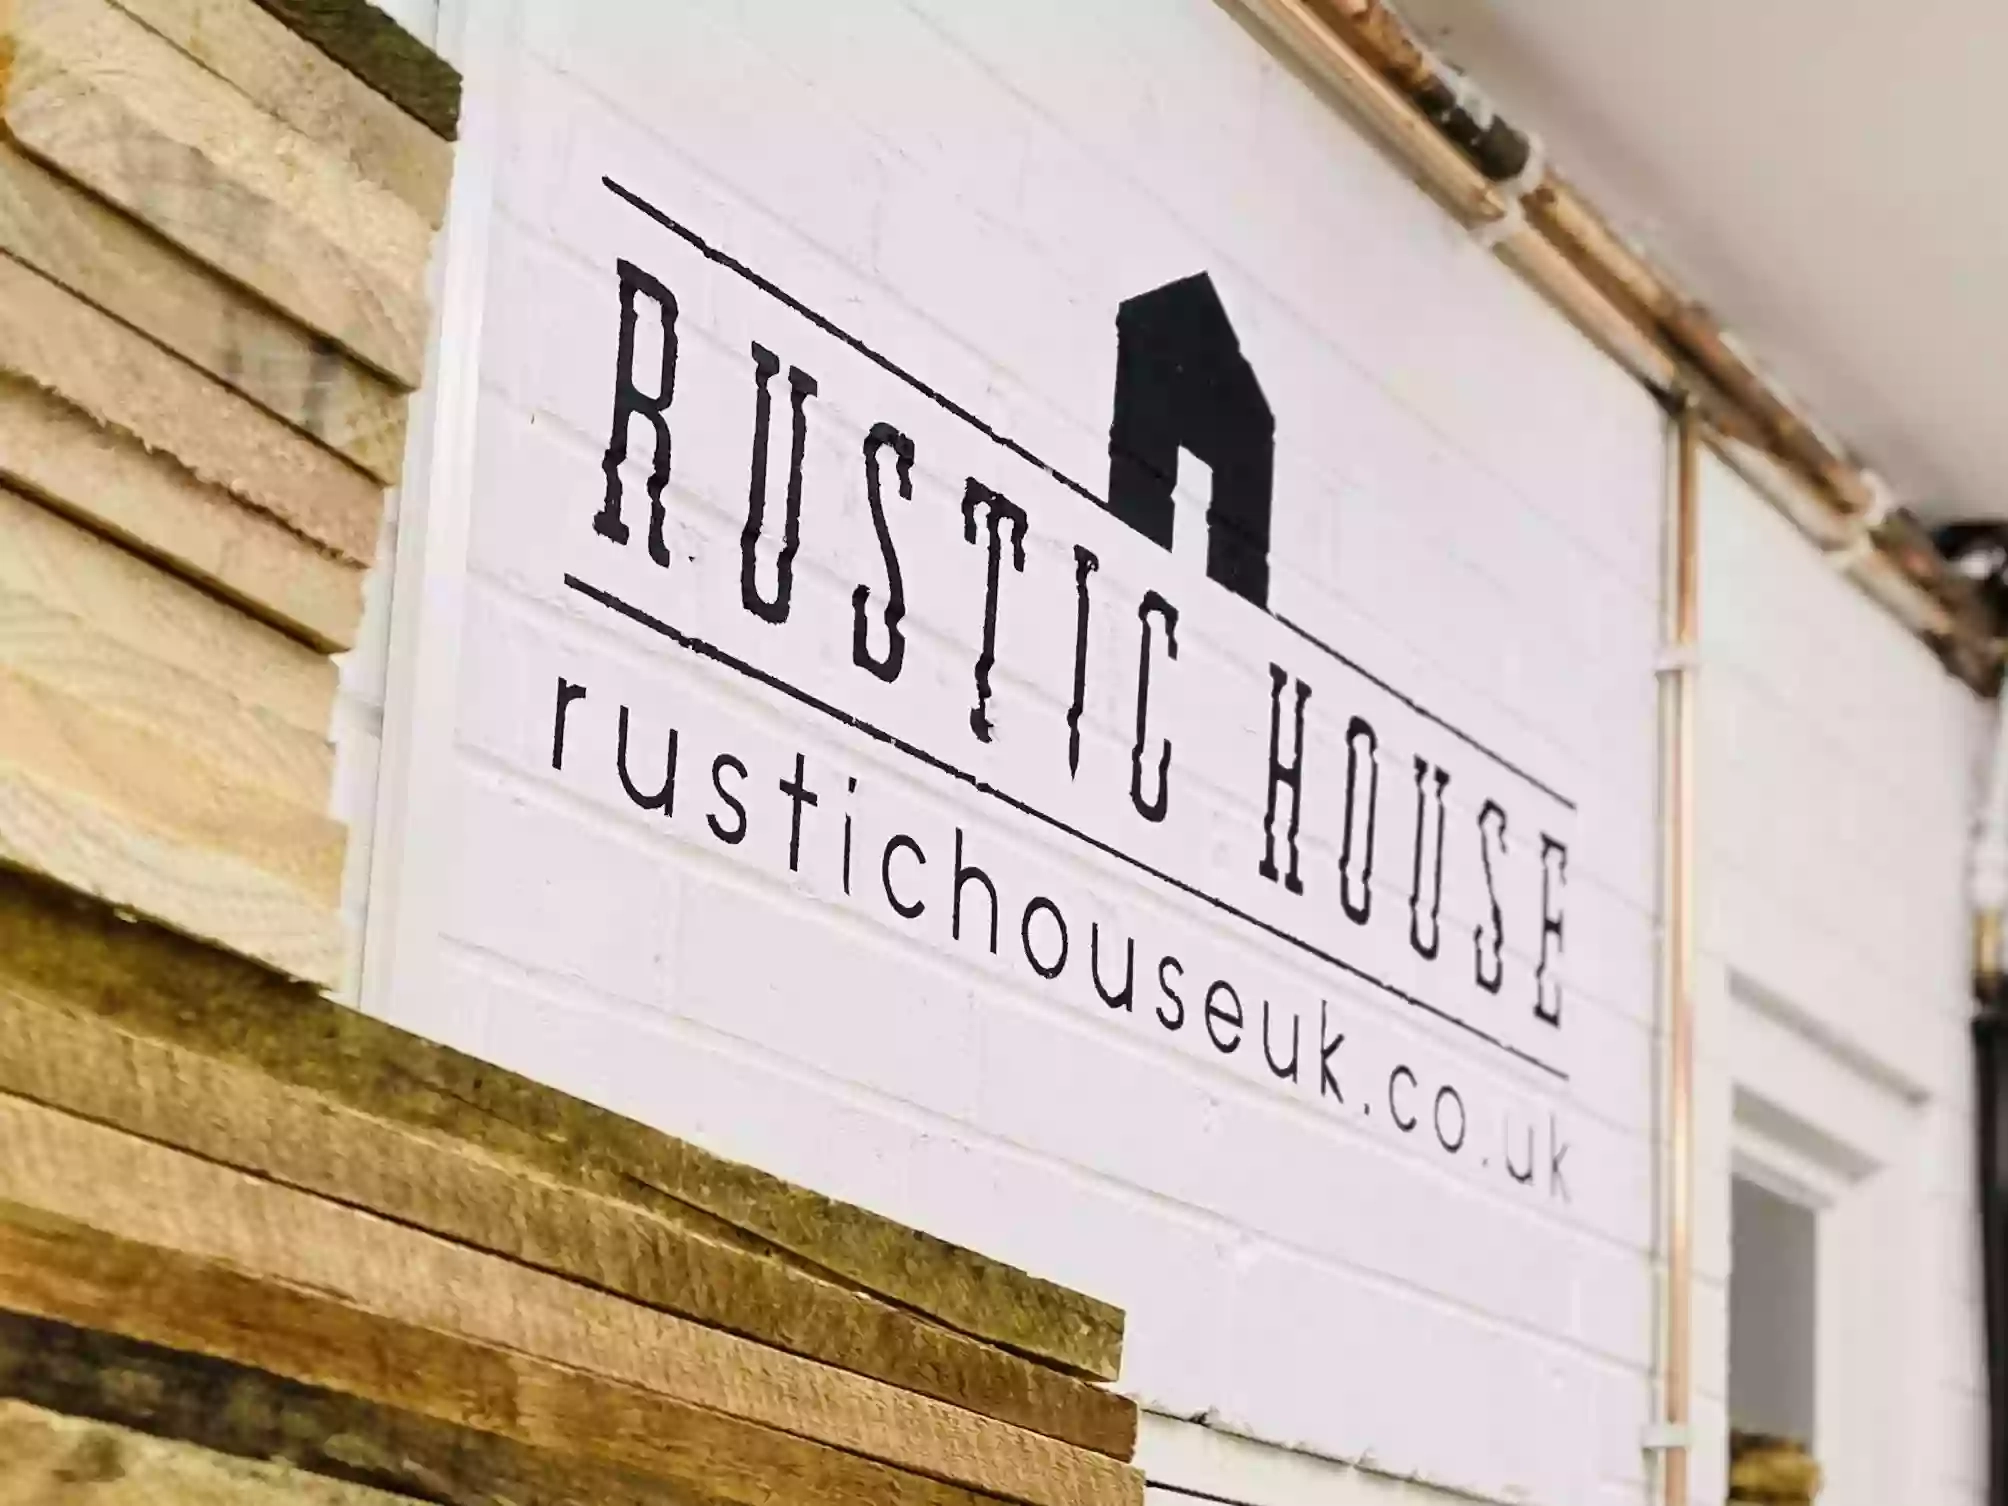 Rustic House UK